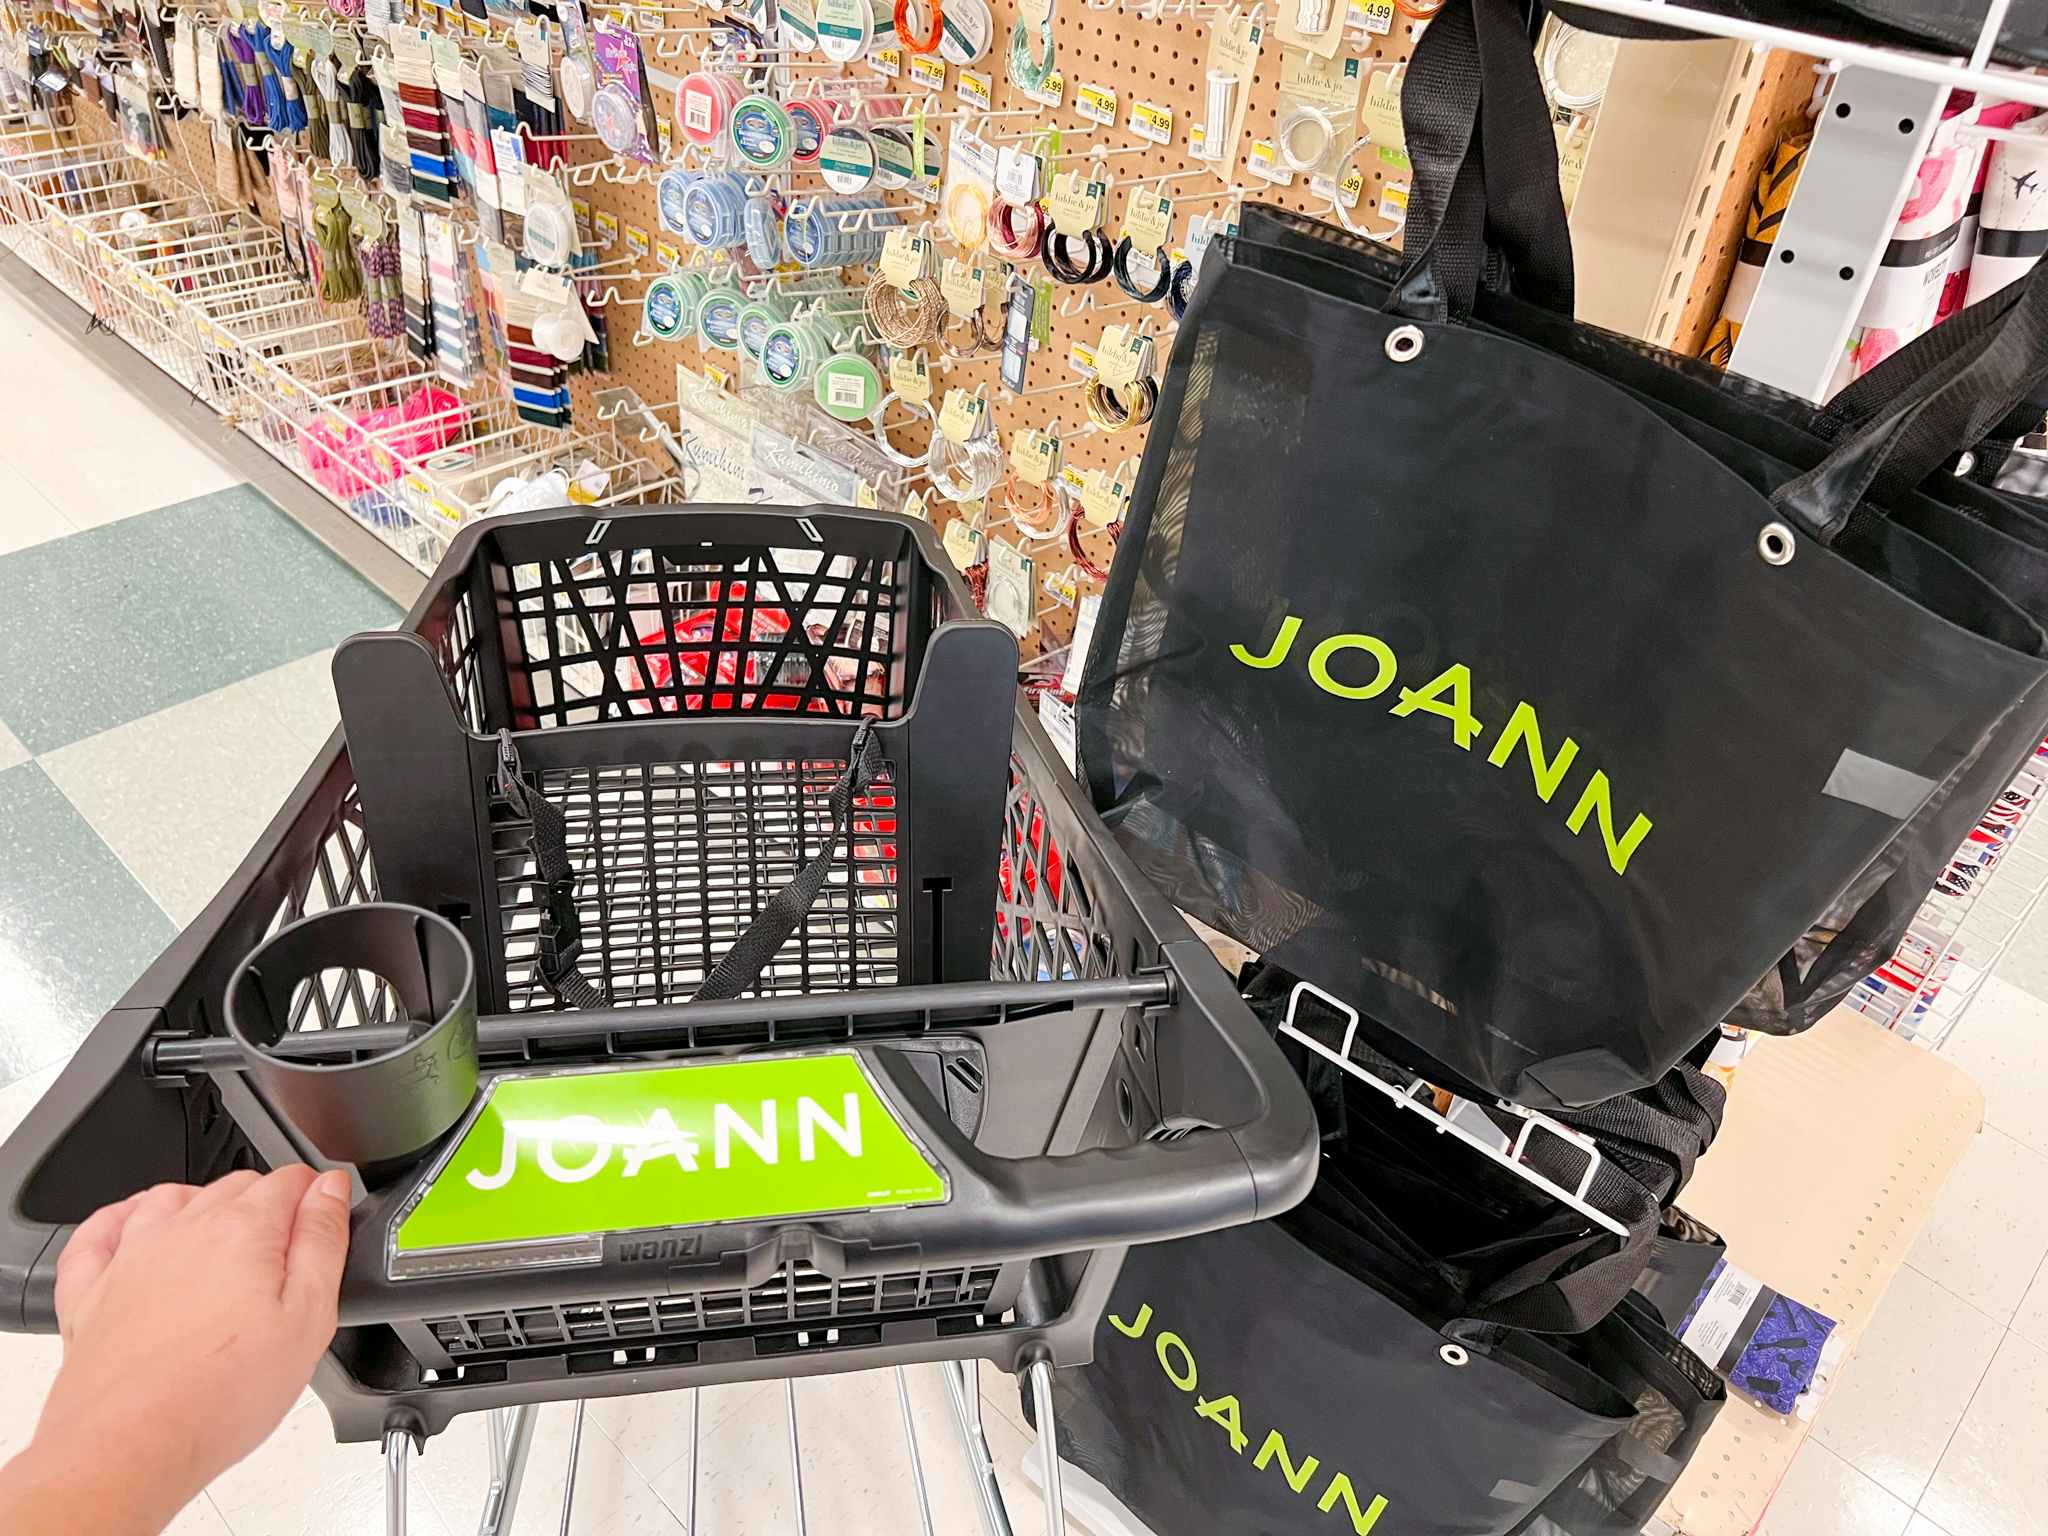 A hand pushing a Joann Fabric shopping cart